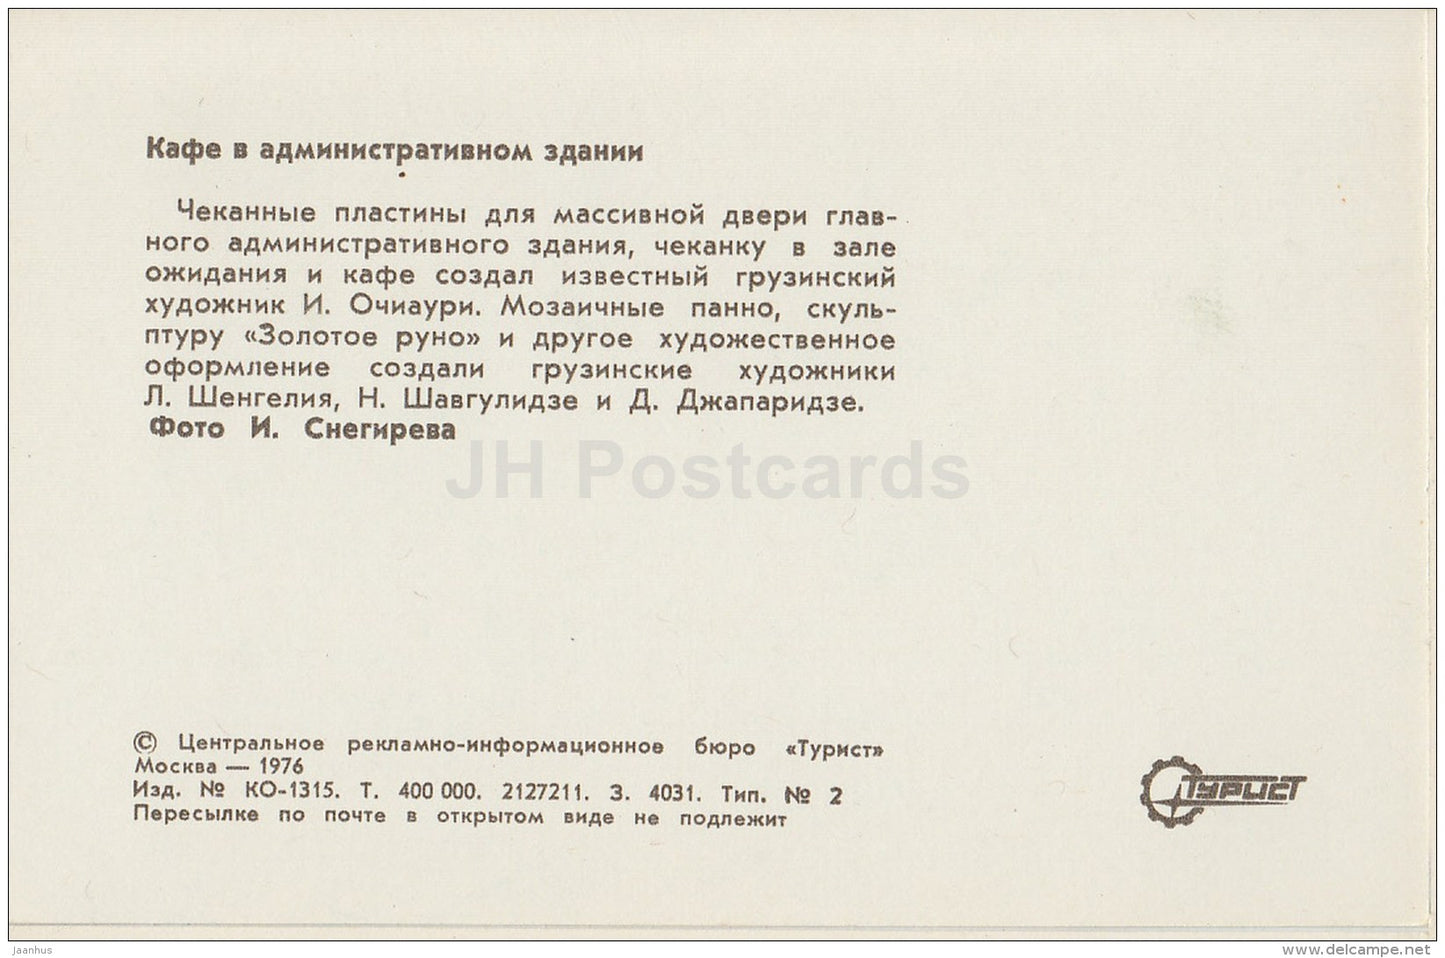 cafe in administrative building - New Athos Cave - Novyi Afon - Abkhazia - Turist - 1976 - Georgia USSR - unused - JH Postcards